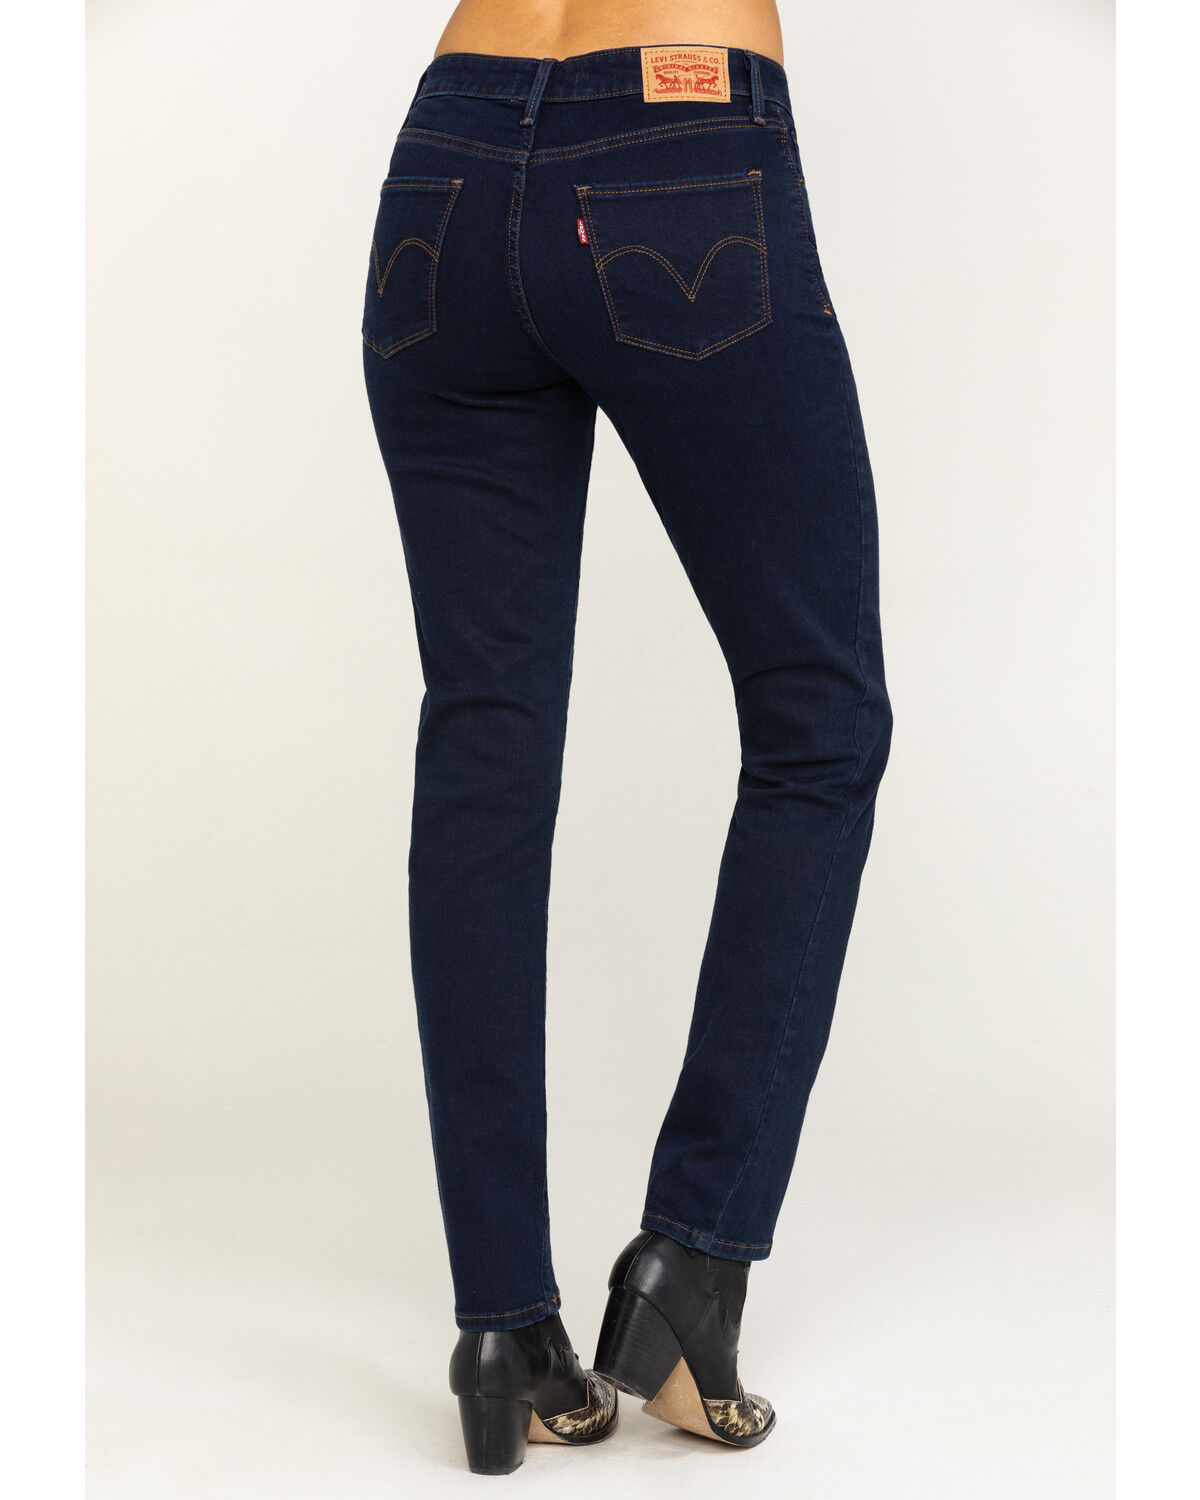 levi's dark blue skinny jeans